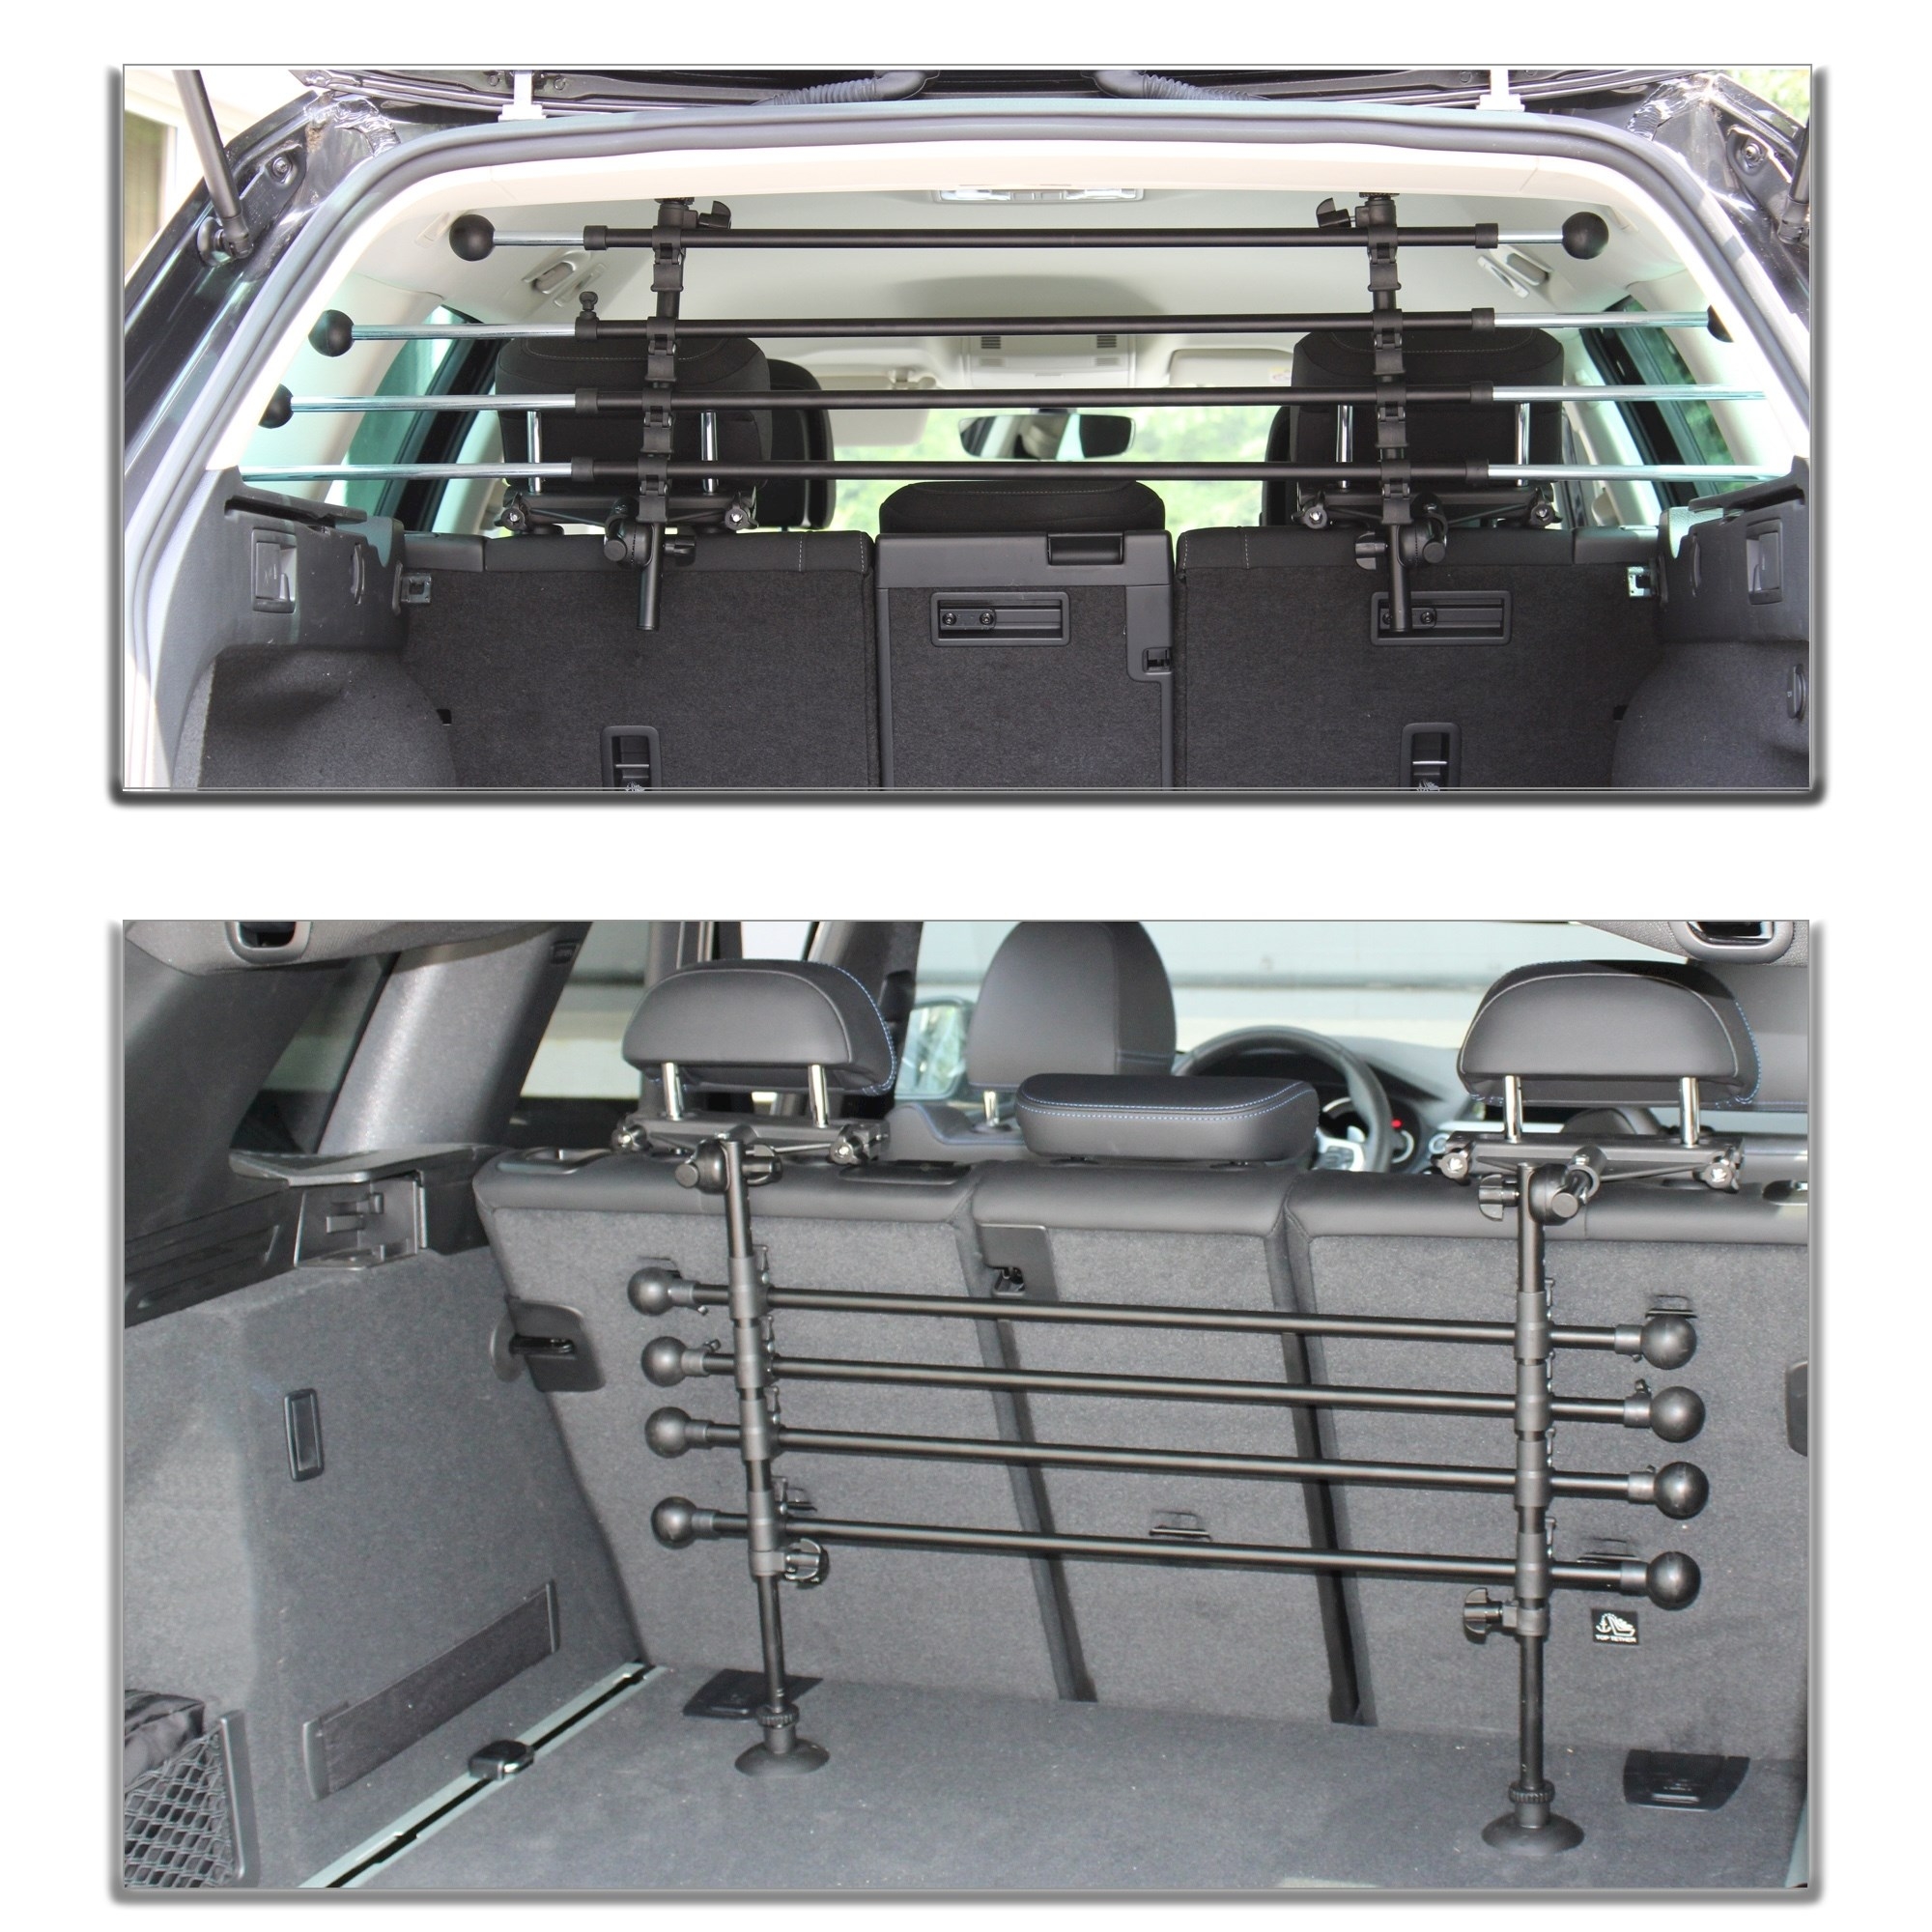 Gepäckraumgitter Hundegitter Kofferraum Schutz Auto SUV Universal  Teleskopstange